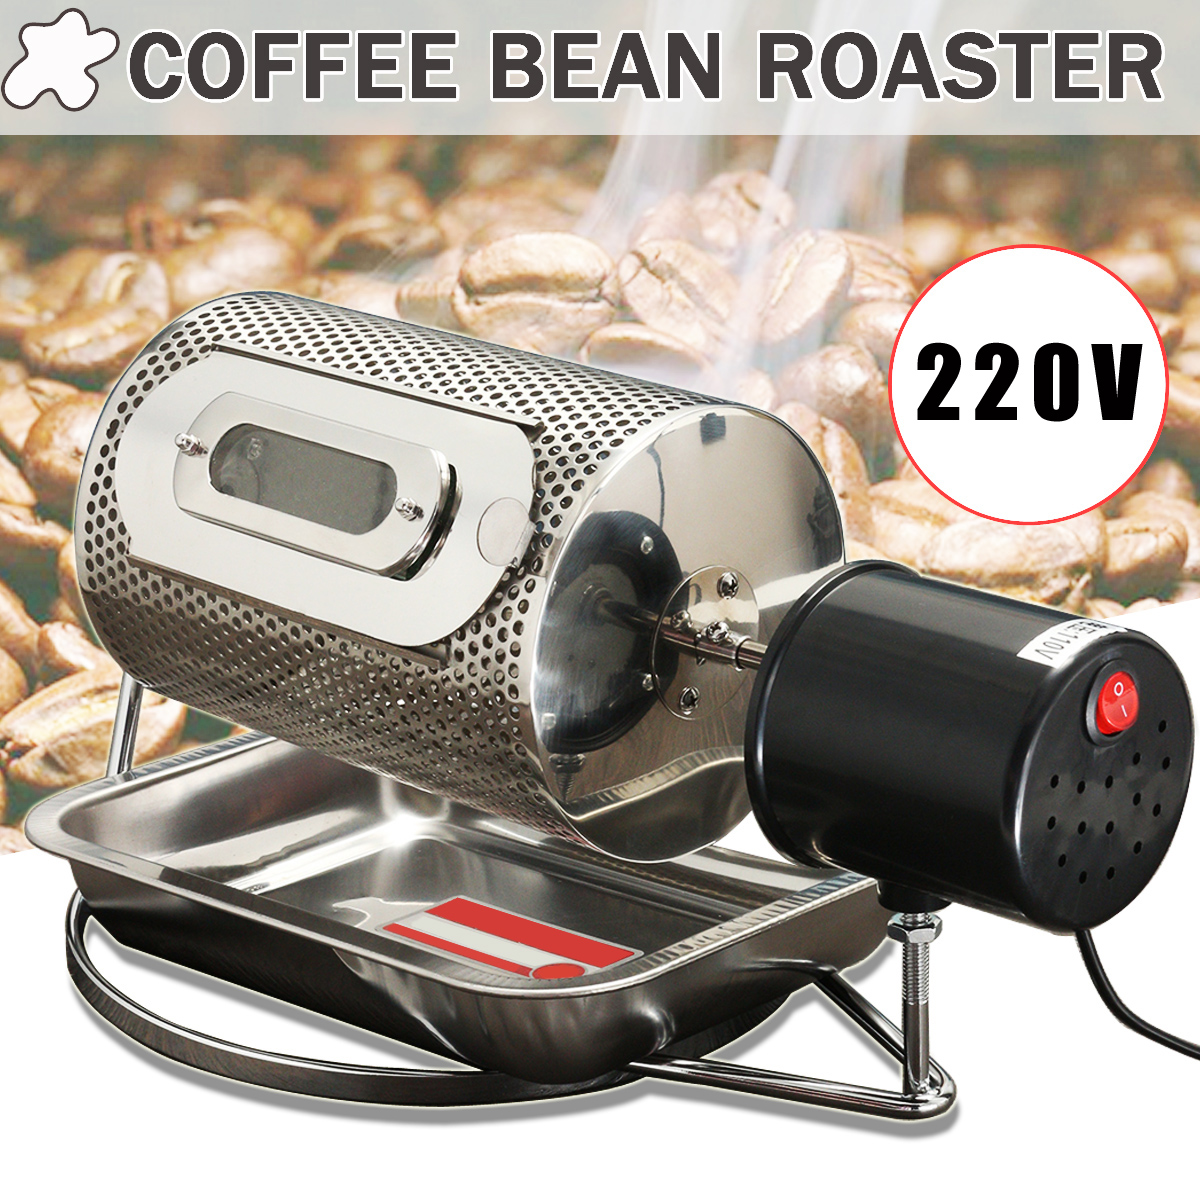 Stainless-Steel-Coffee-Bean-Roasting-Machine-Coffee-Roaster-Roller-Baker-220V-Tools-1281284